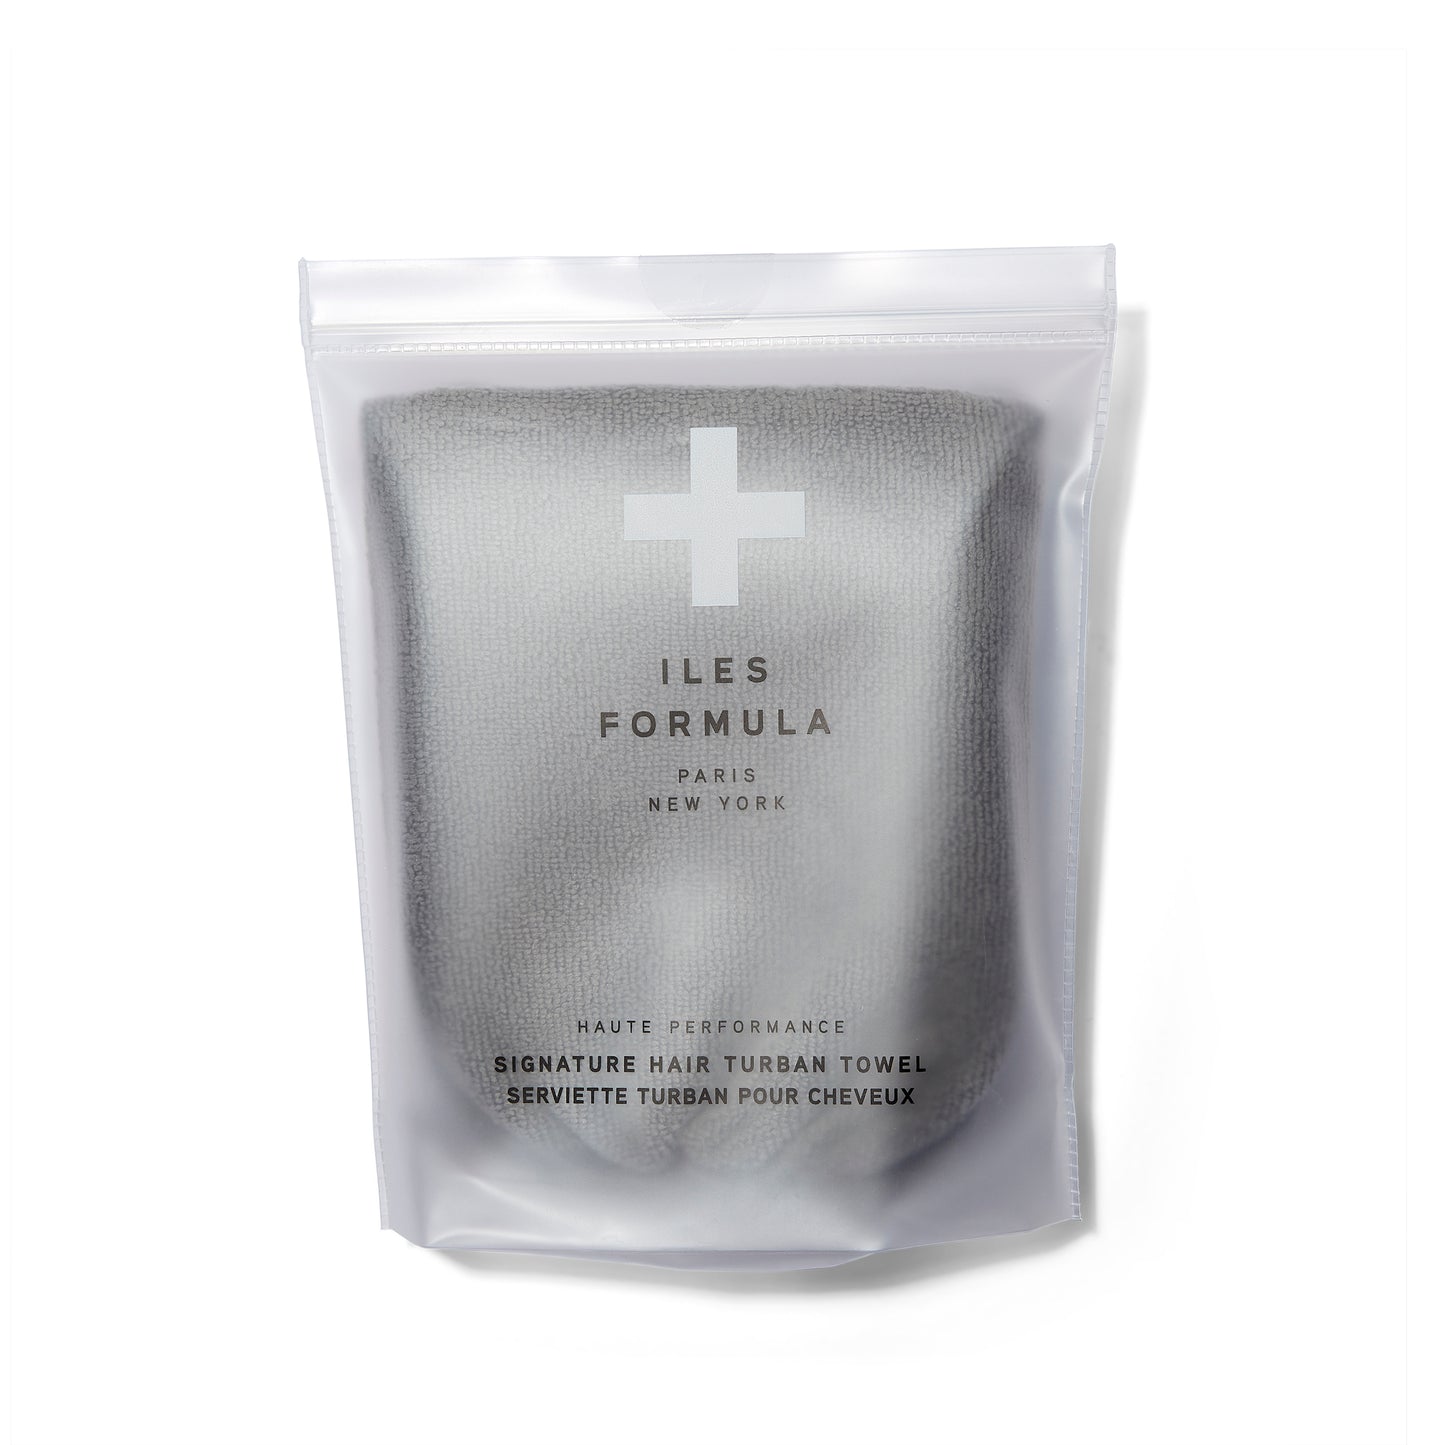  Iles Formula Signature Hair Turban Towel in grey in it's packaging.